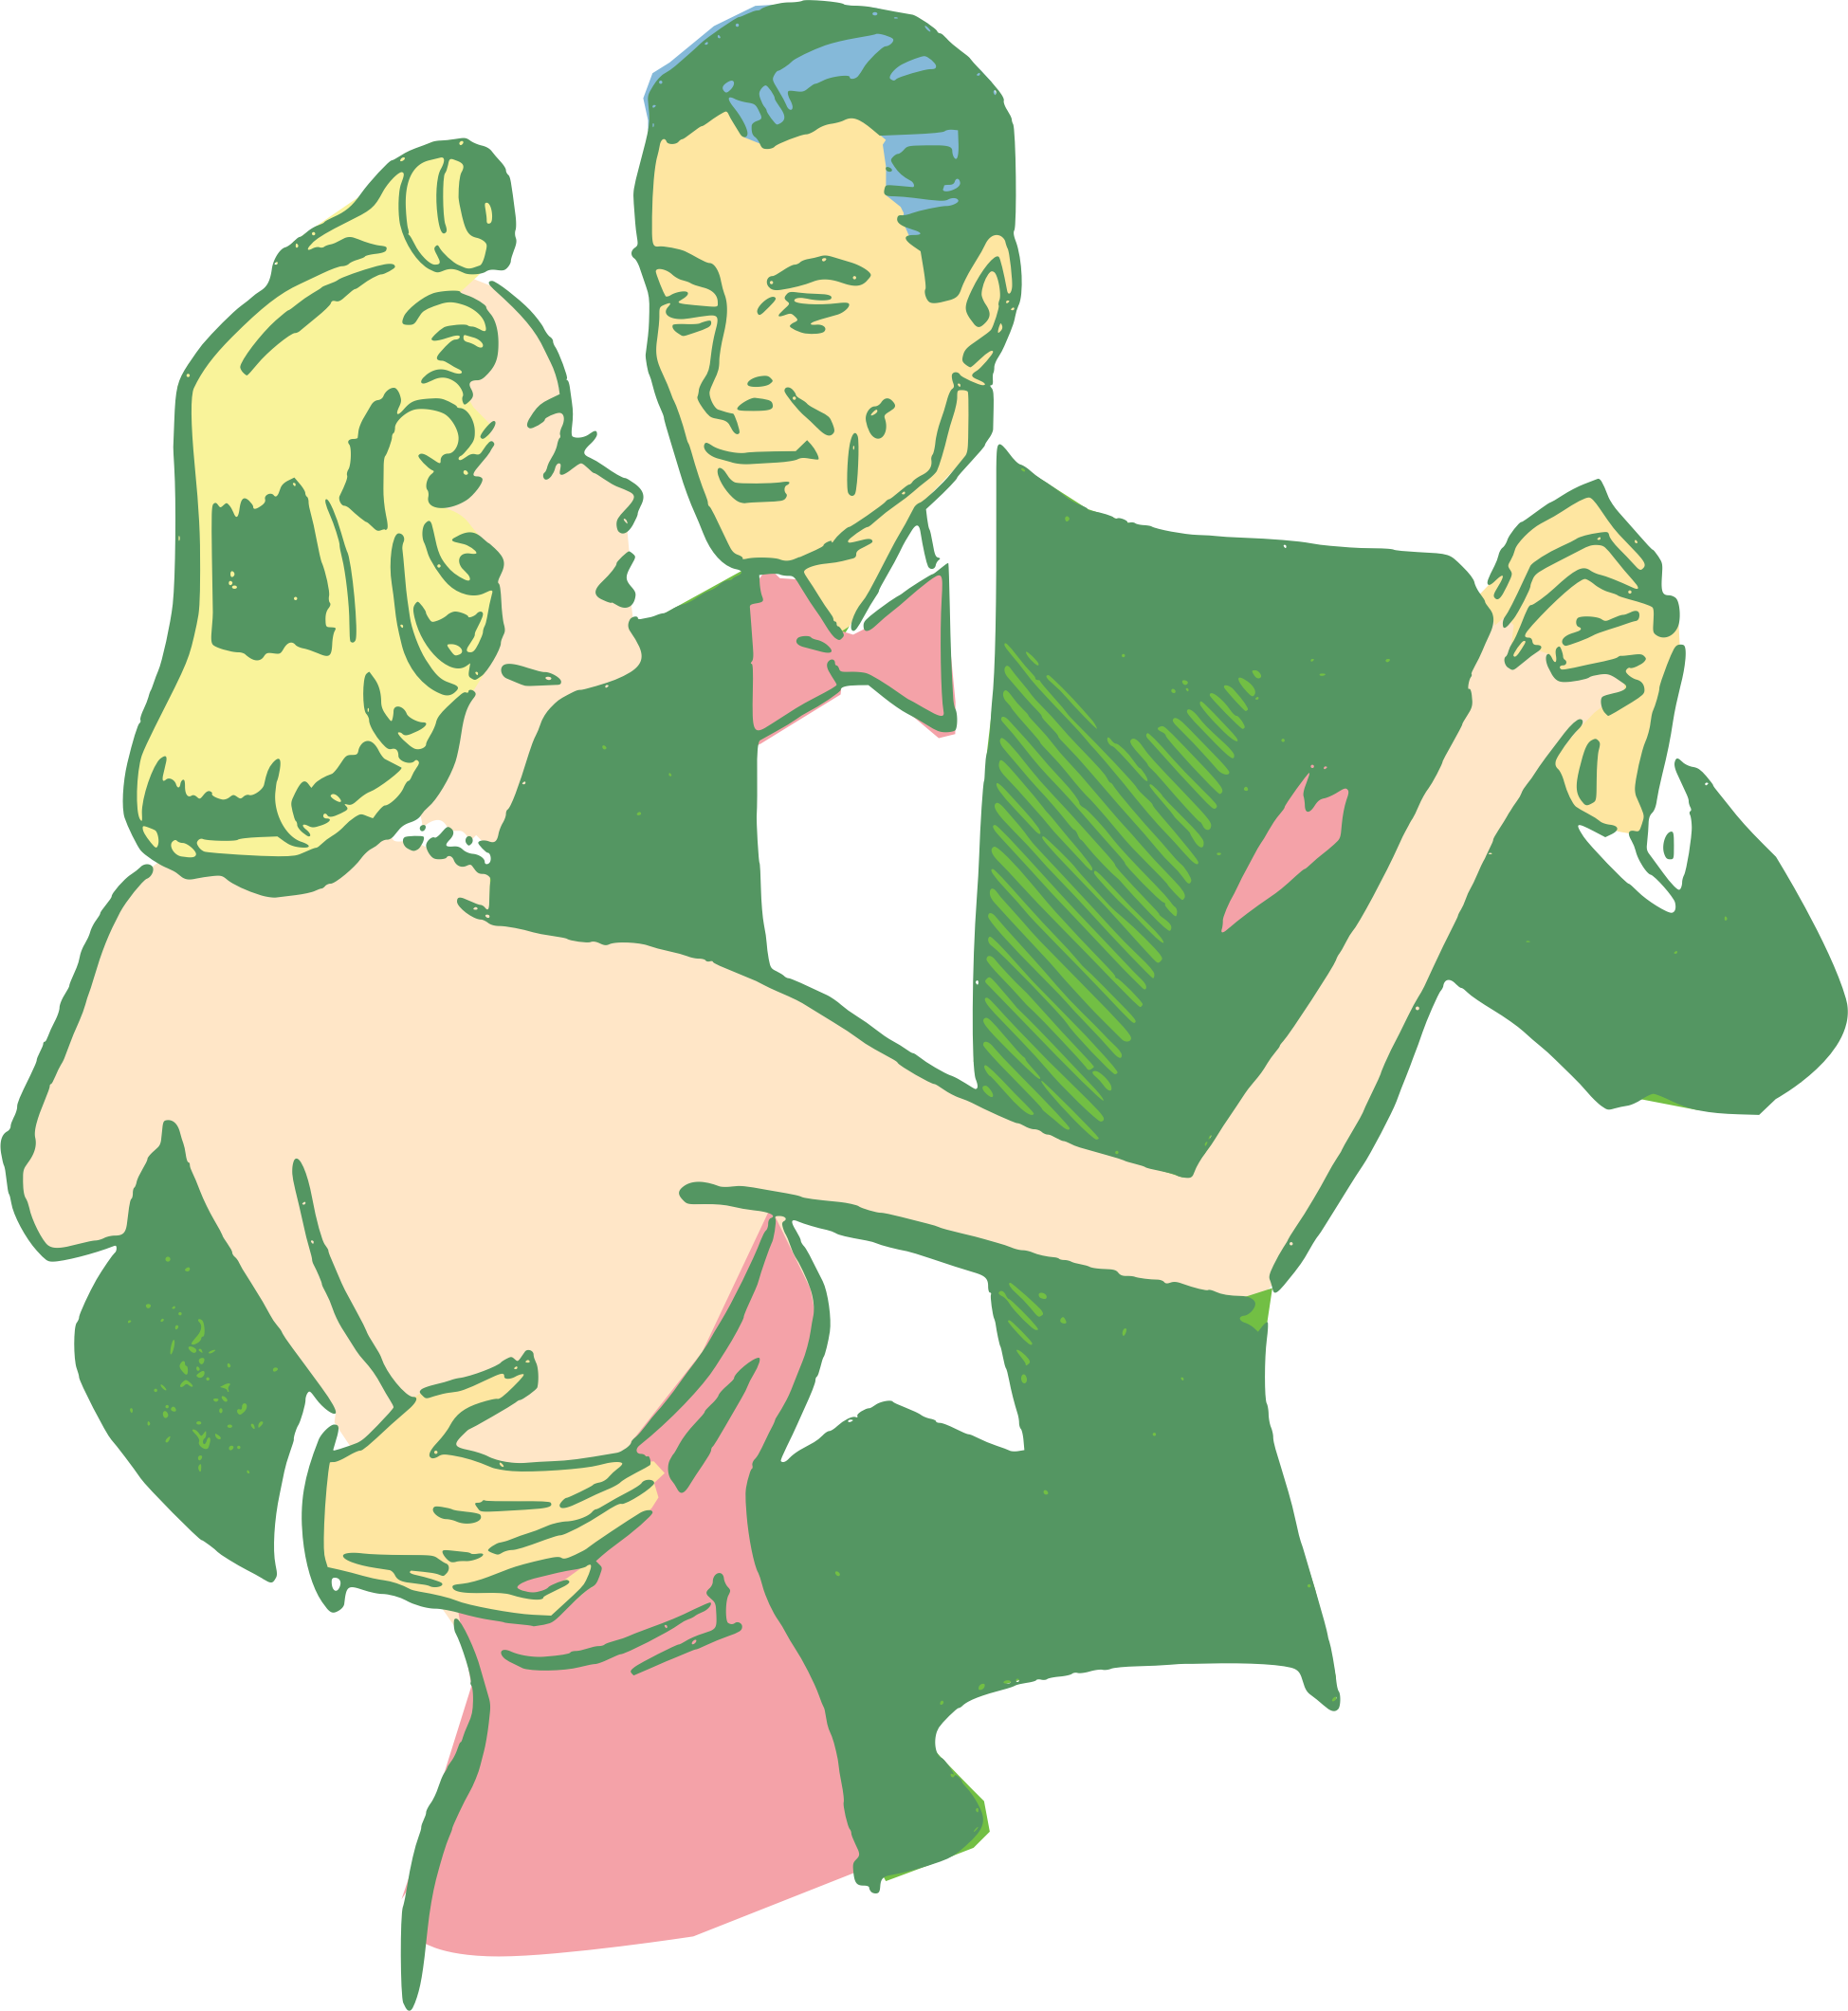 Clipart - Dancing Couple Colorized